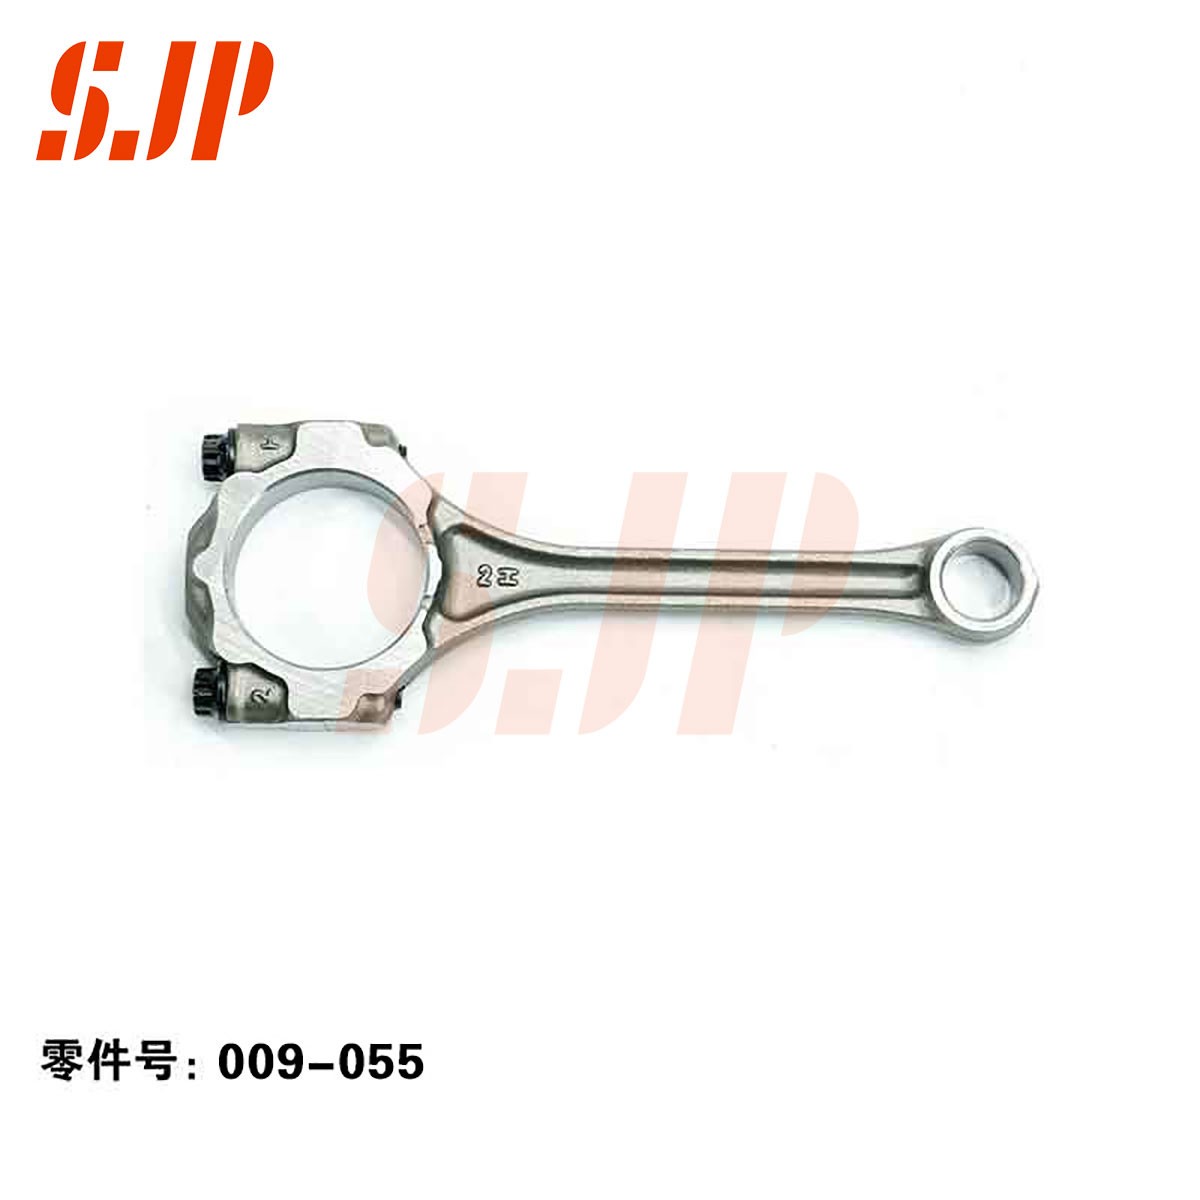 SJ-009-055 Connecting Rod For 4A15/4GX15/CMC/SENIA/Jiabao